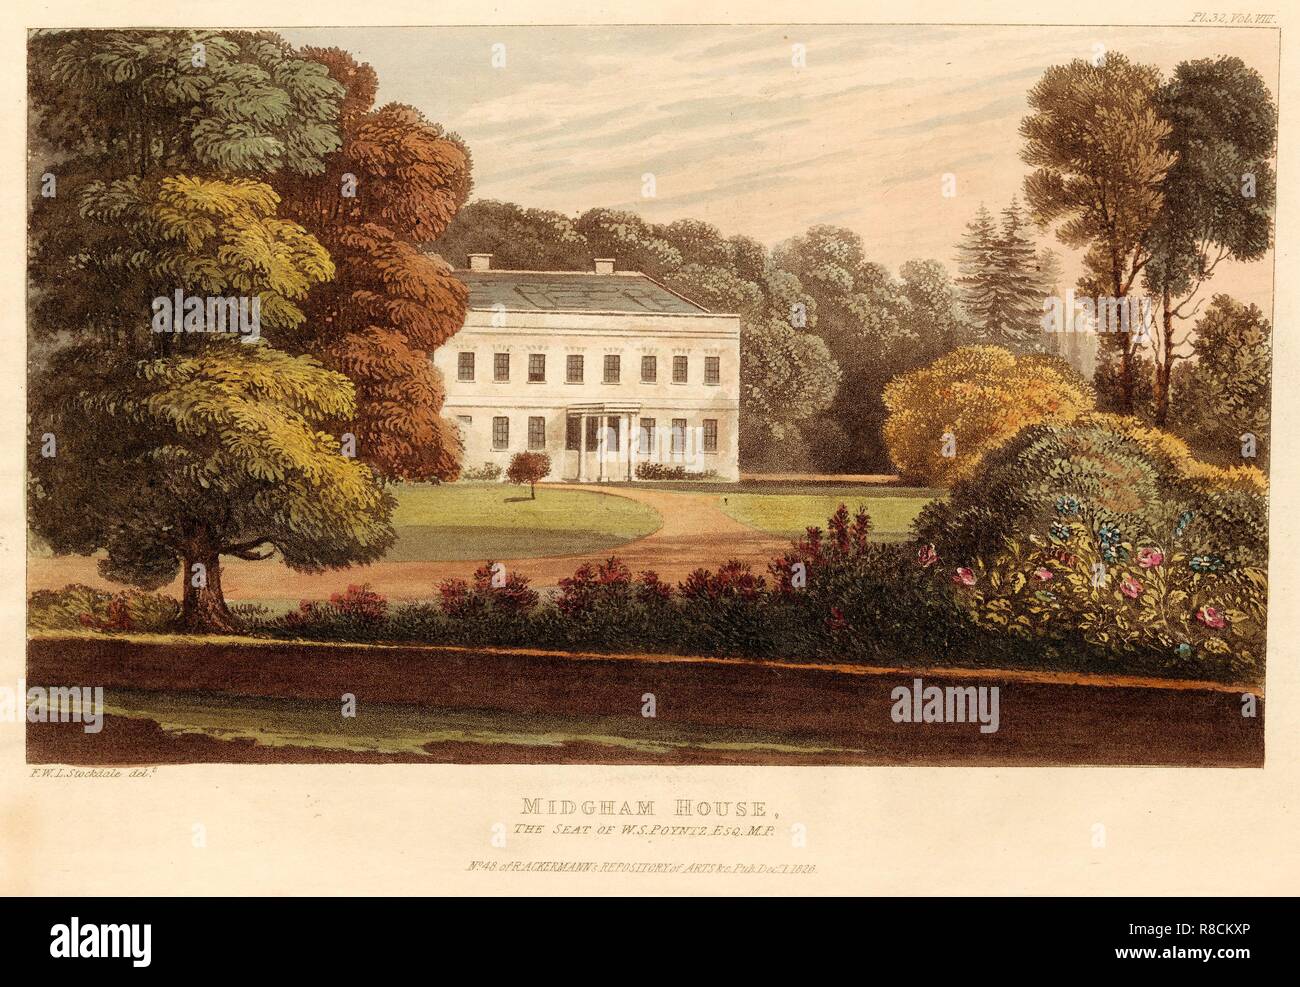 Midgham House, the Seat of W.S. Poyntz, Esq., M.P., pub. 1826. Creator: English School (19th Century). Stock Photo